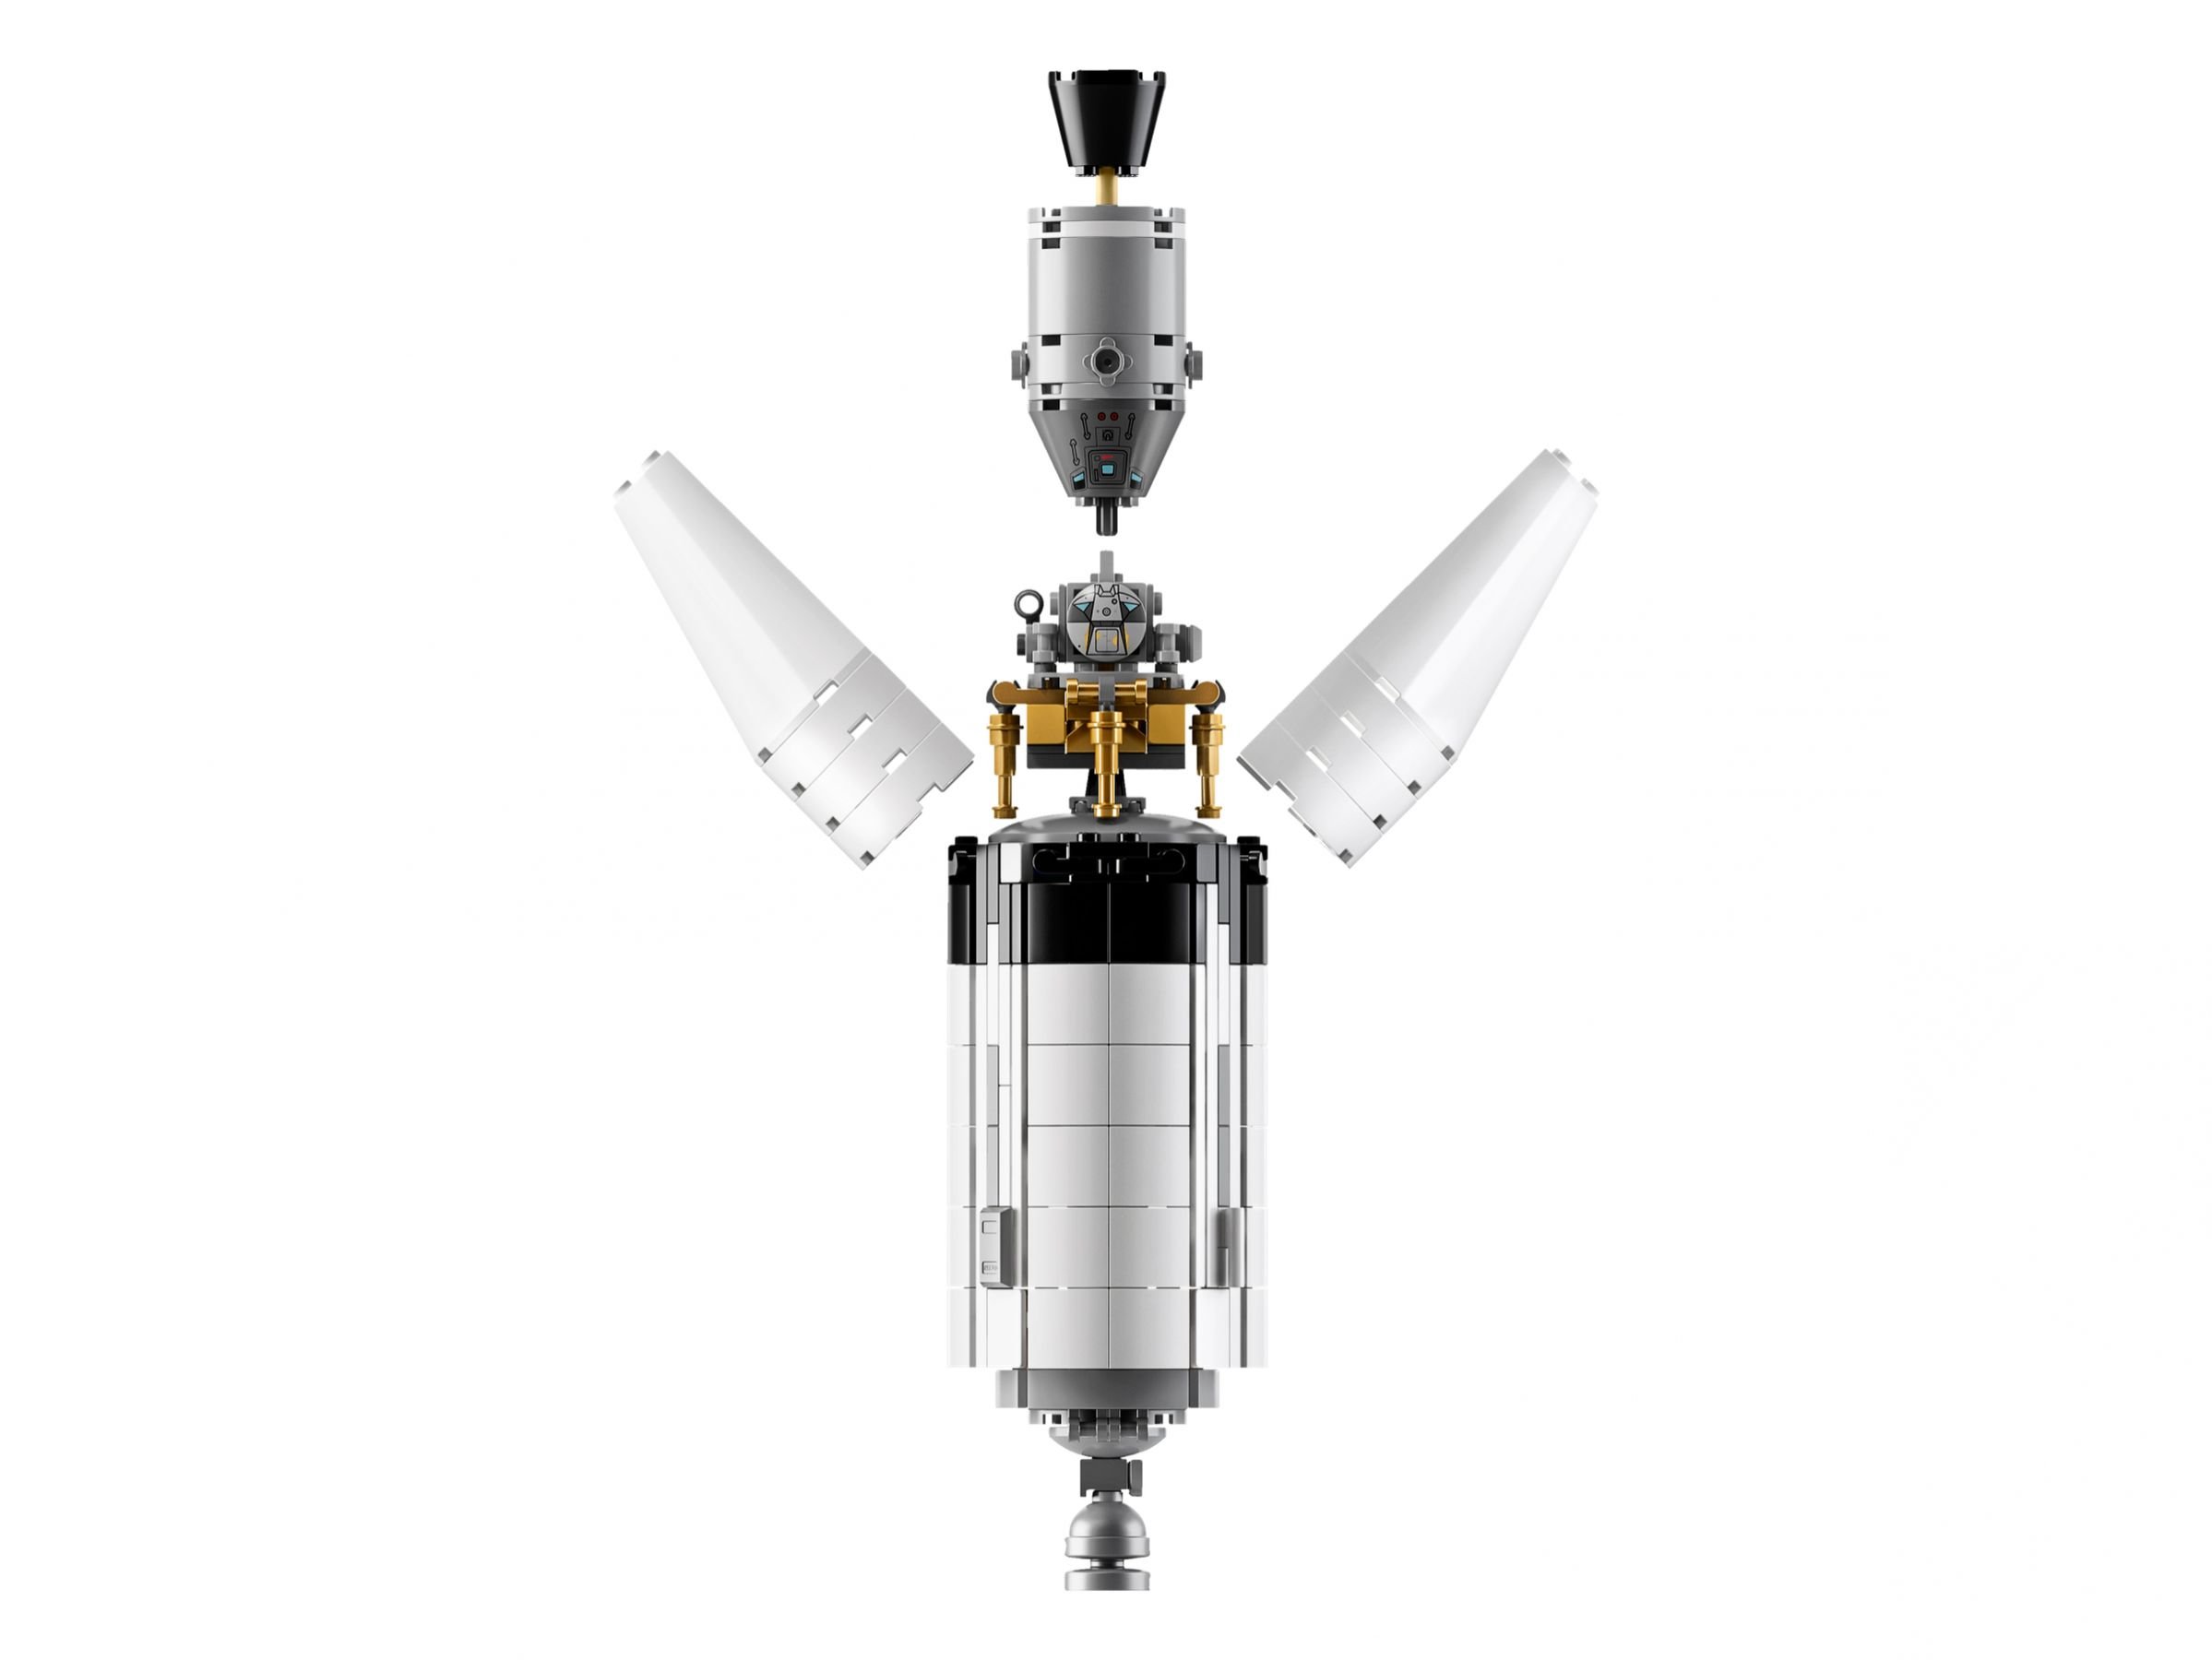 LEGO Ideas 21309 LEGO® NASA Apollo Saturn V LEGO_21309_alt5.jpg